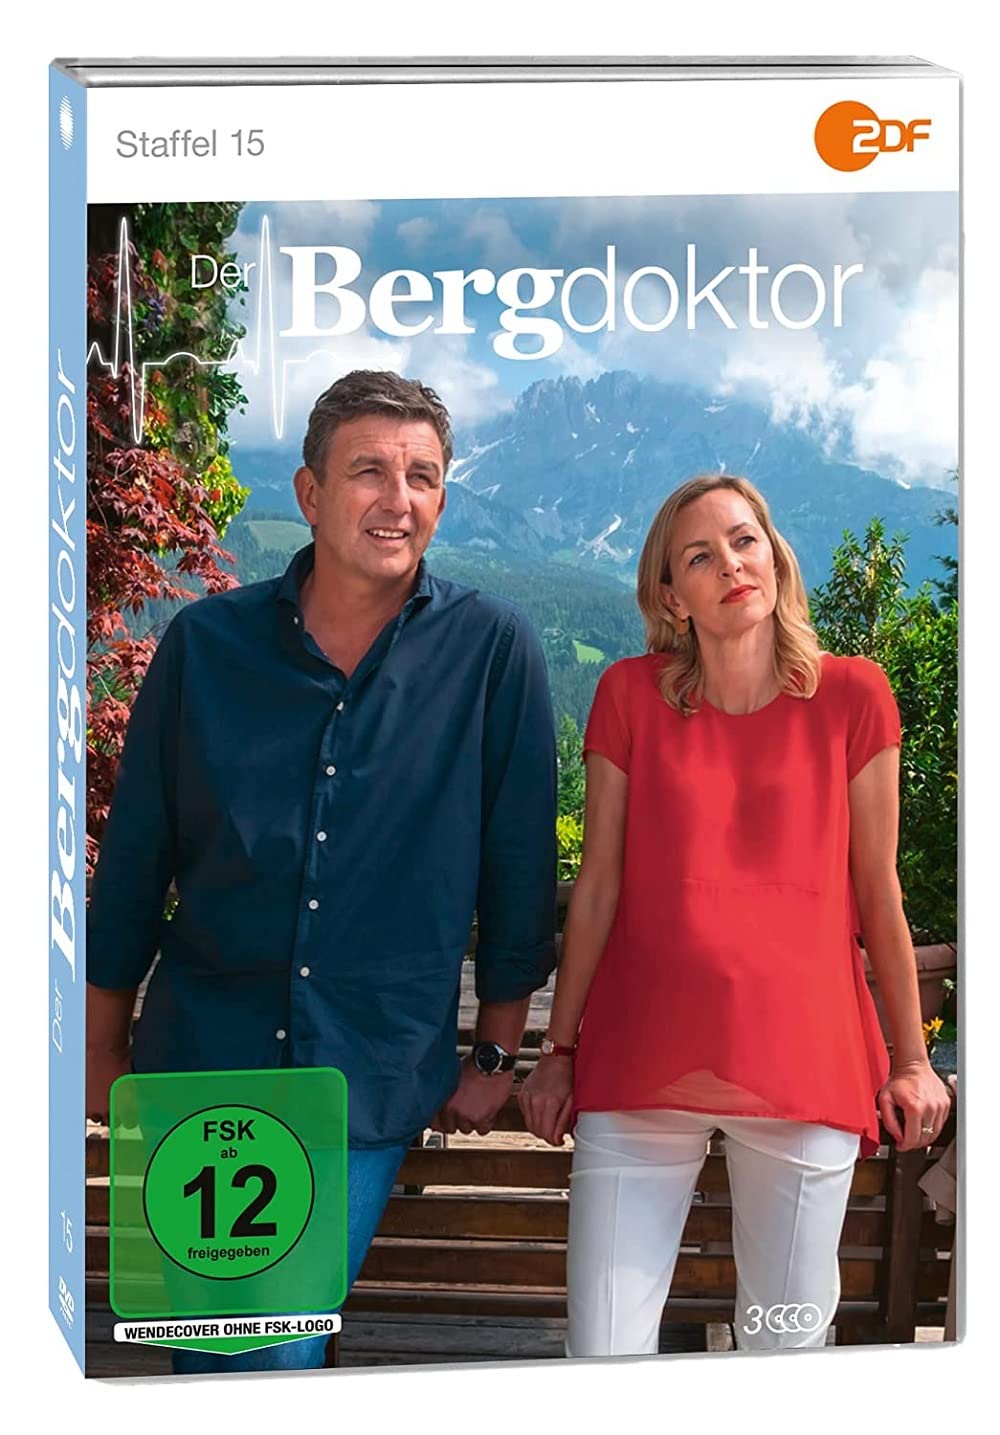 Der Bergdoktor Staffel 1-15 (1-10 Box und Staffel 11+12+13+14+15) Folgen 1-136